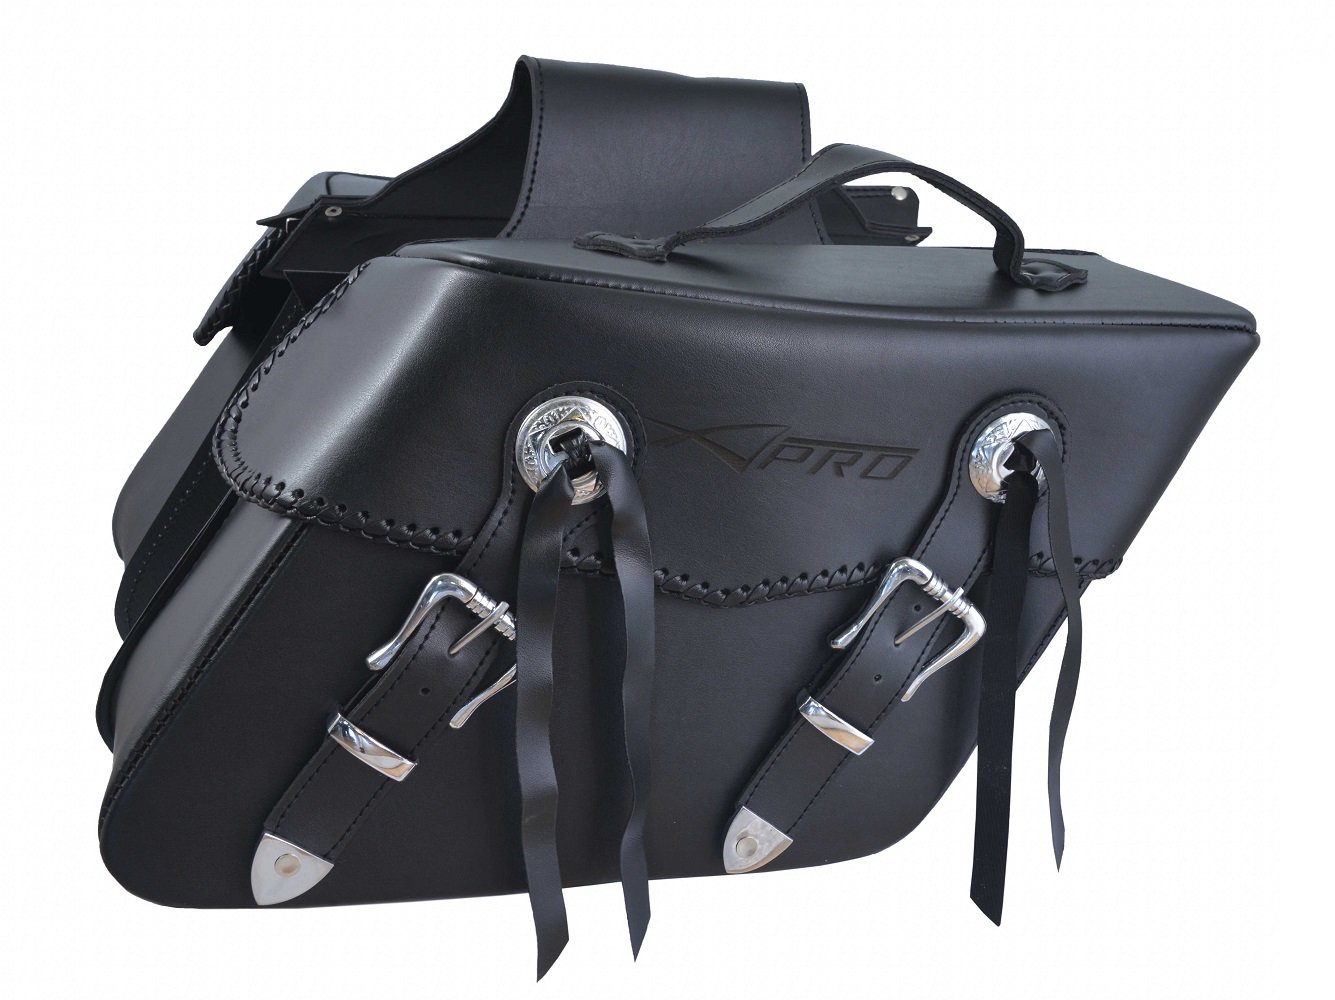 A-Pro Fringed Panniers Bag Pair Saddle Bag Luggage Custom Chopper Travel Bag Black von A-Pro